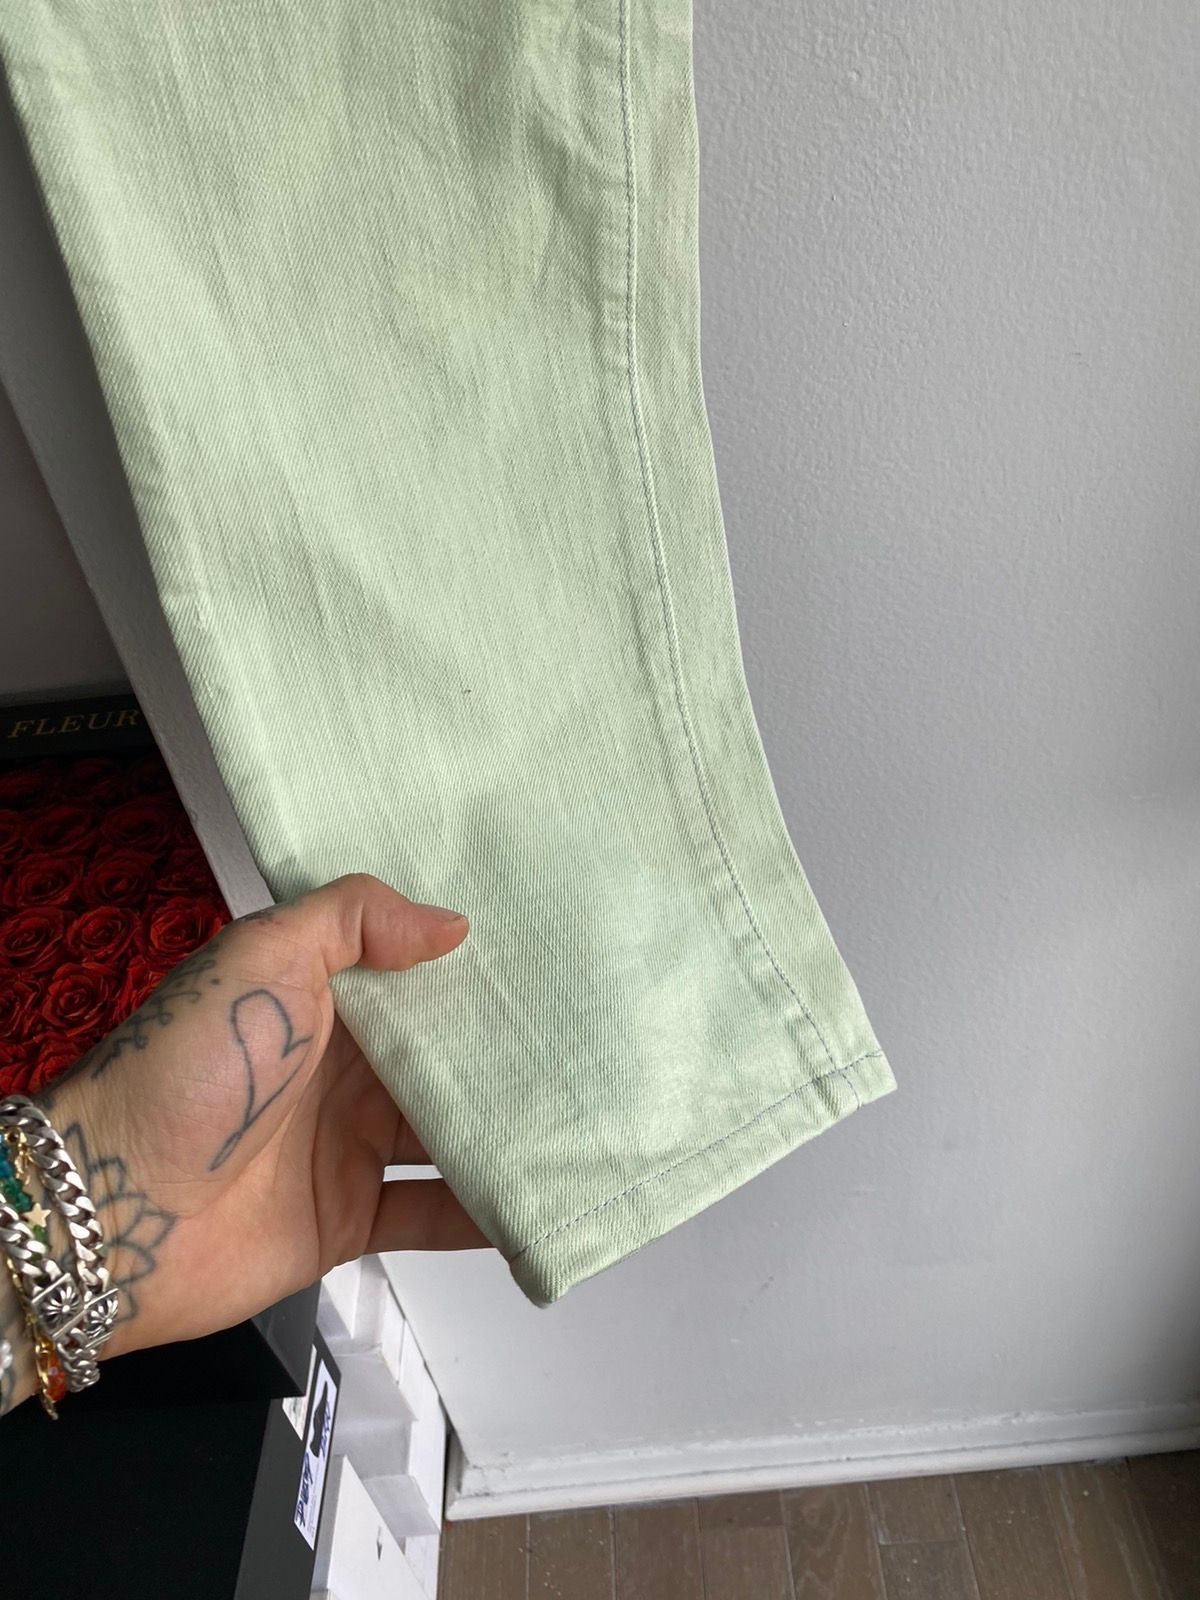 Dior Homme 06 RUNWAY Mint Green Cat Claw MIJ Denim Jeans